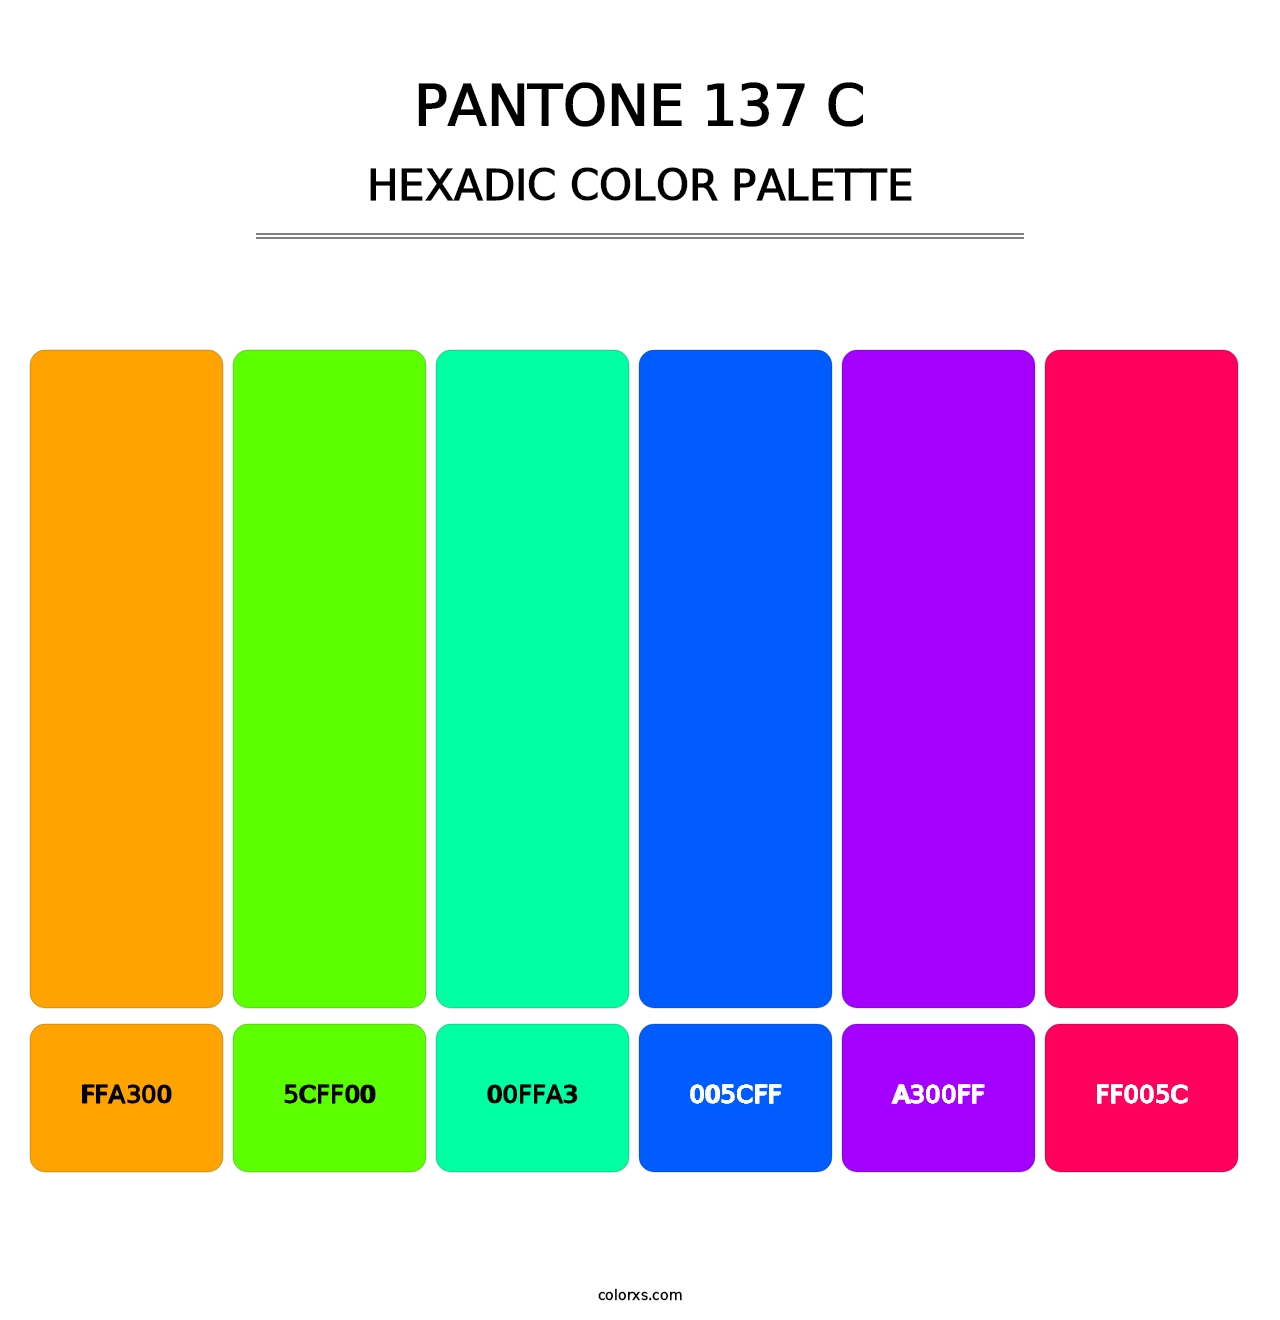 PANTONE 137 C - Hexadic Color Palette